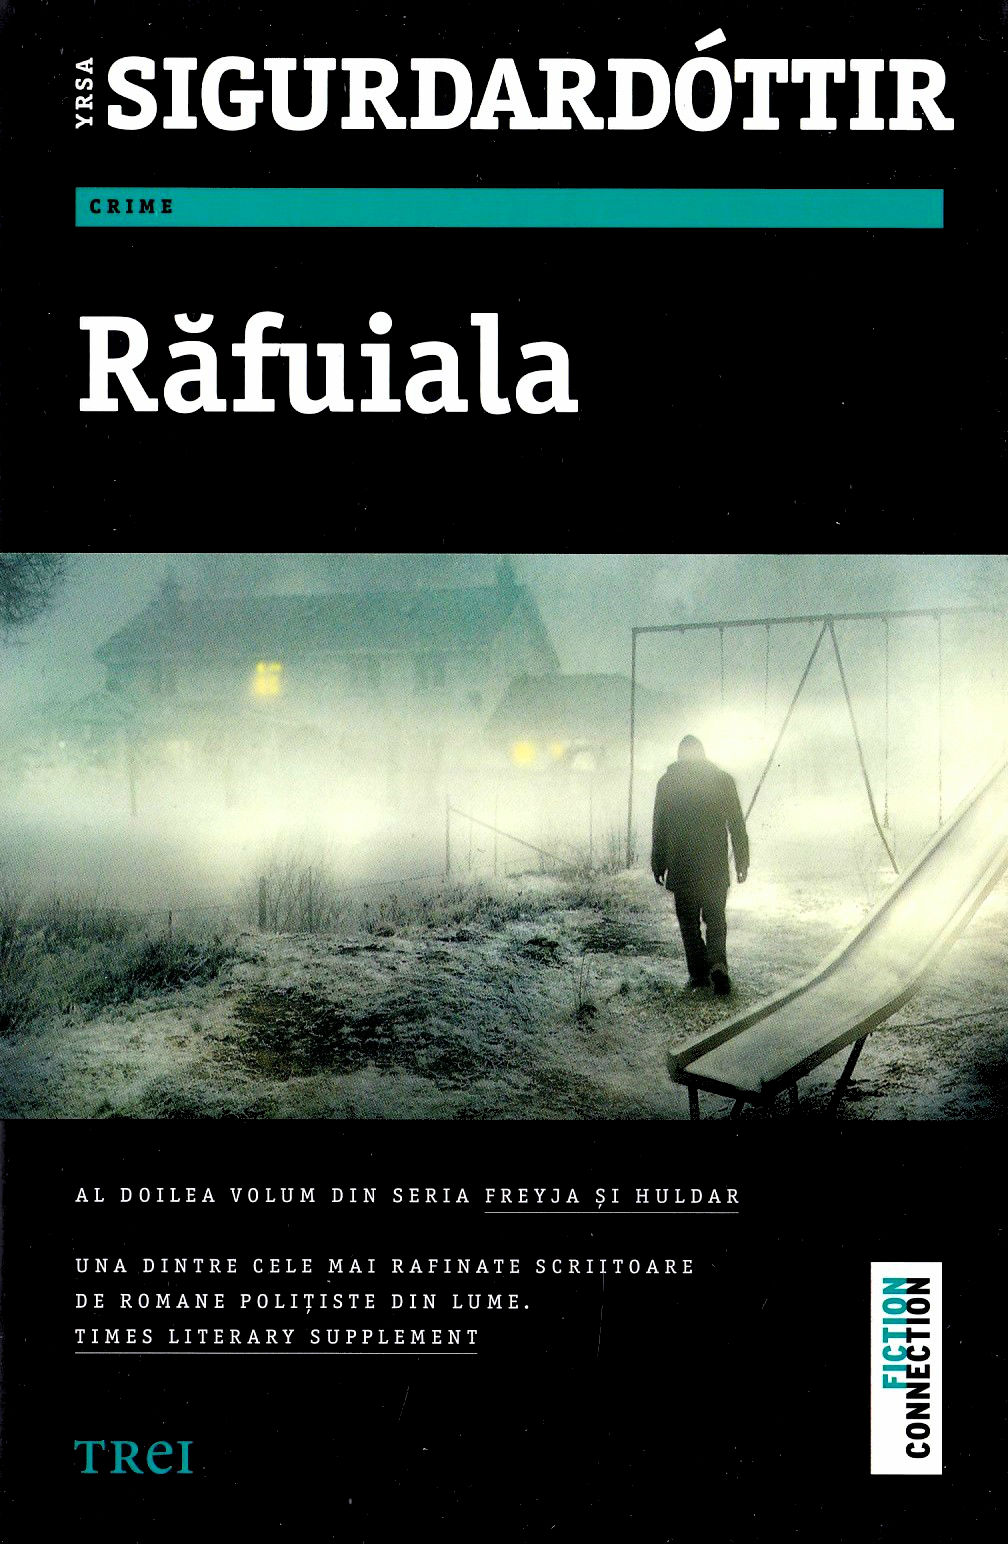 Rafuiala - Yrsa Sigurdardottir